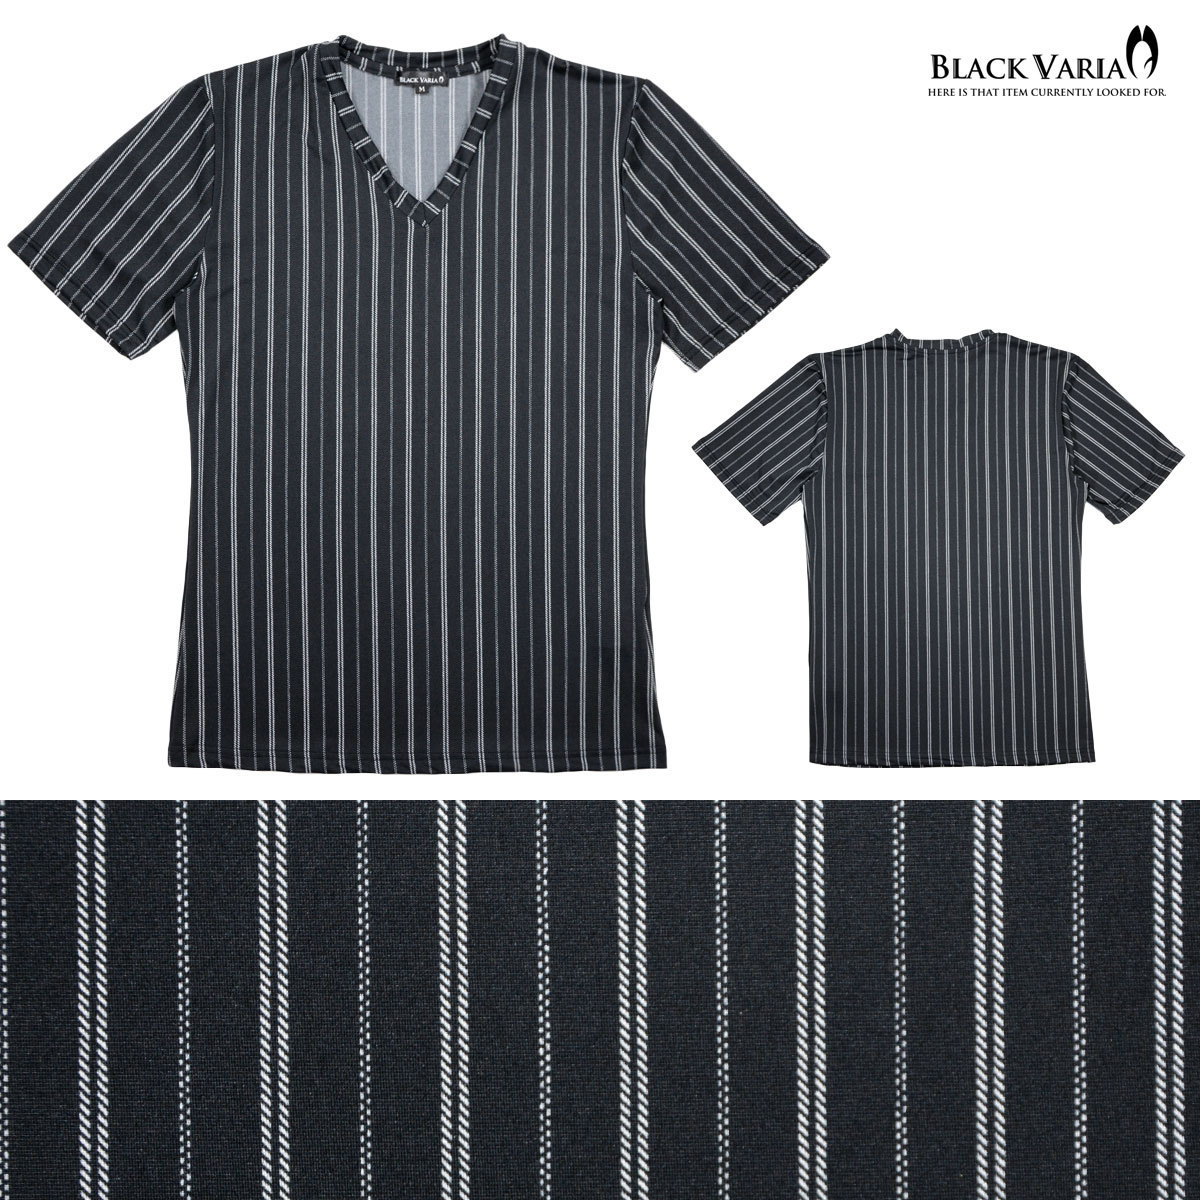 181302-bkwh ブラックバリア ストライプ ストレッチ 半袖 Vネック Tシャツ 日本製 細身 メンズ(ブラック黒ホワイト白) XL 総柄 スリム_画像3